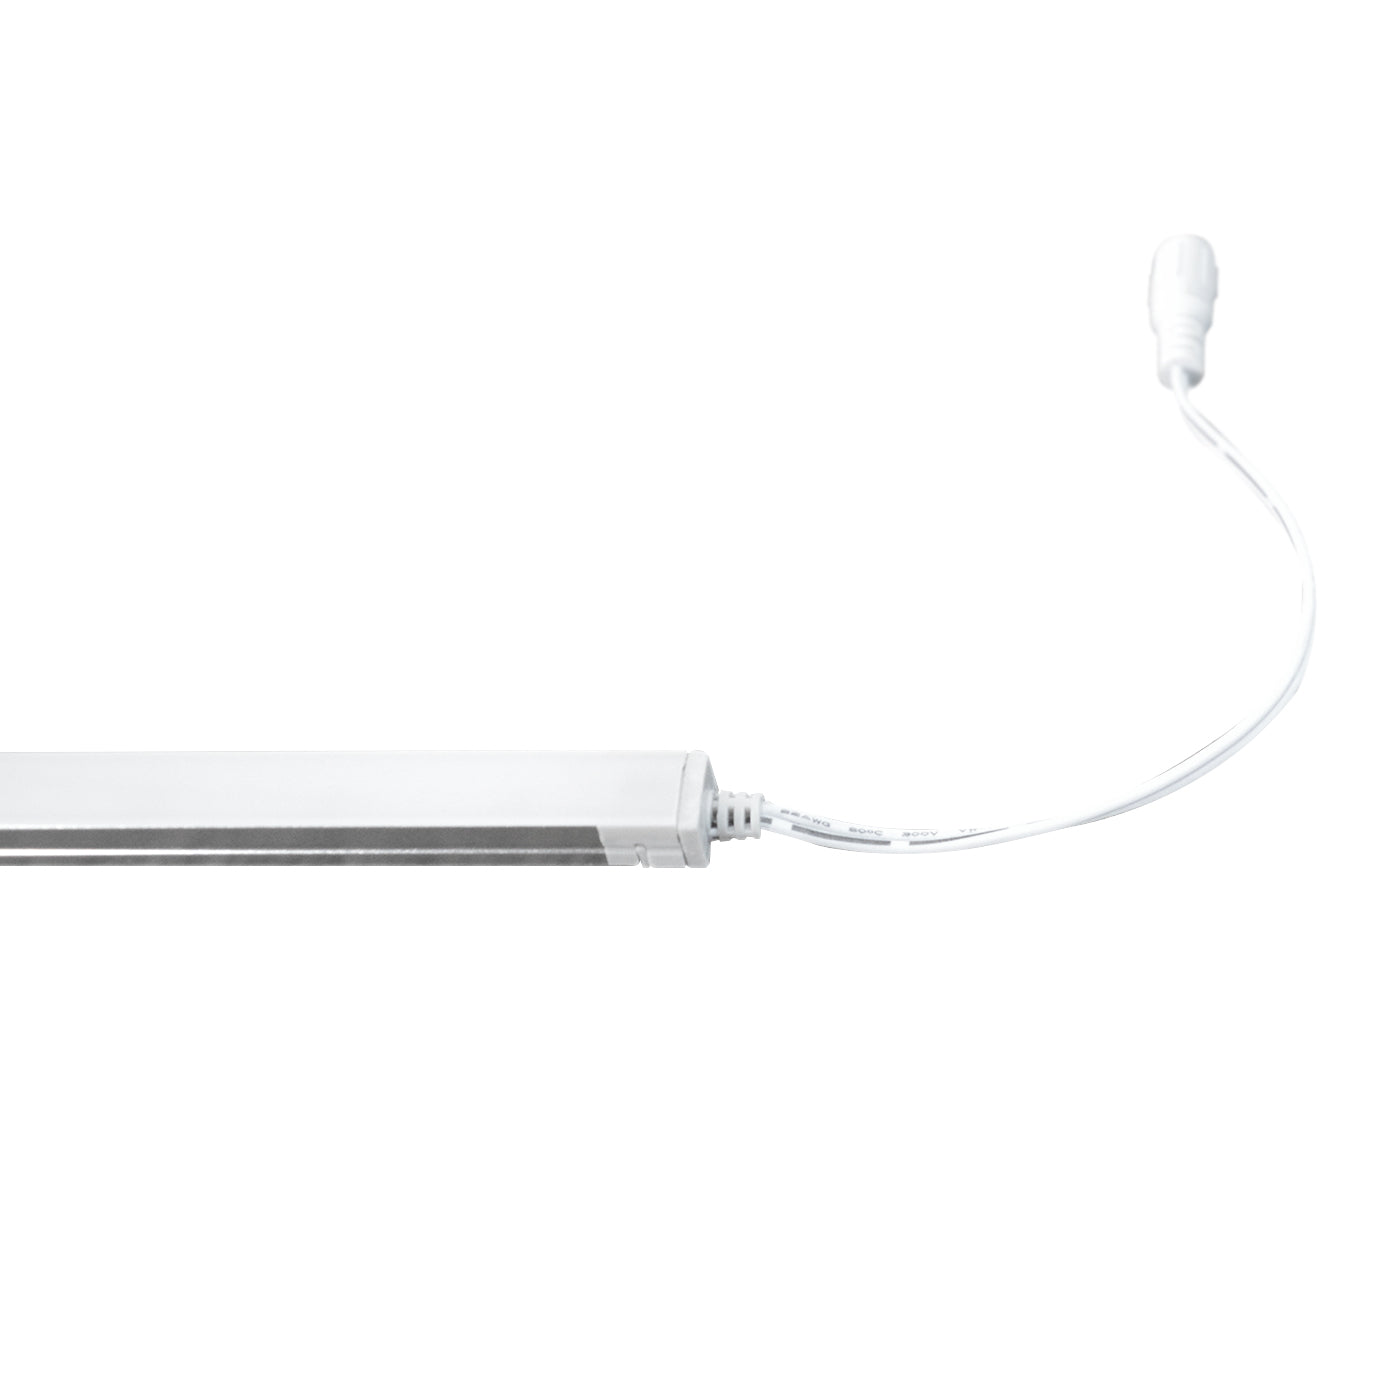 9 in. LED 4-Bar Tool-Free Under Cabinet Lighting Kit, Adjustable White